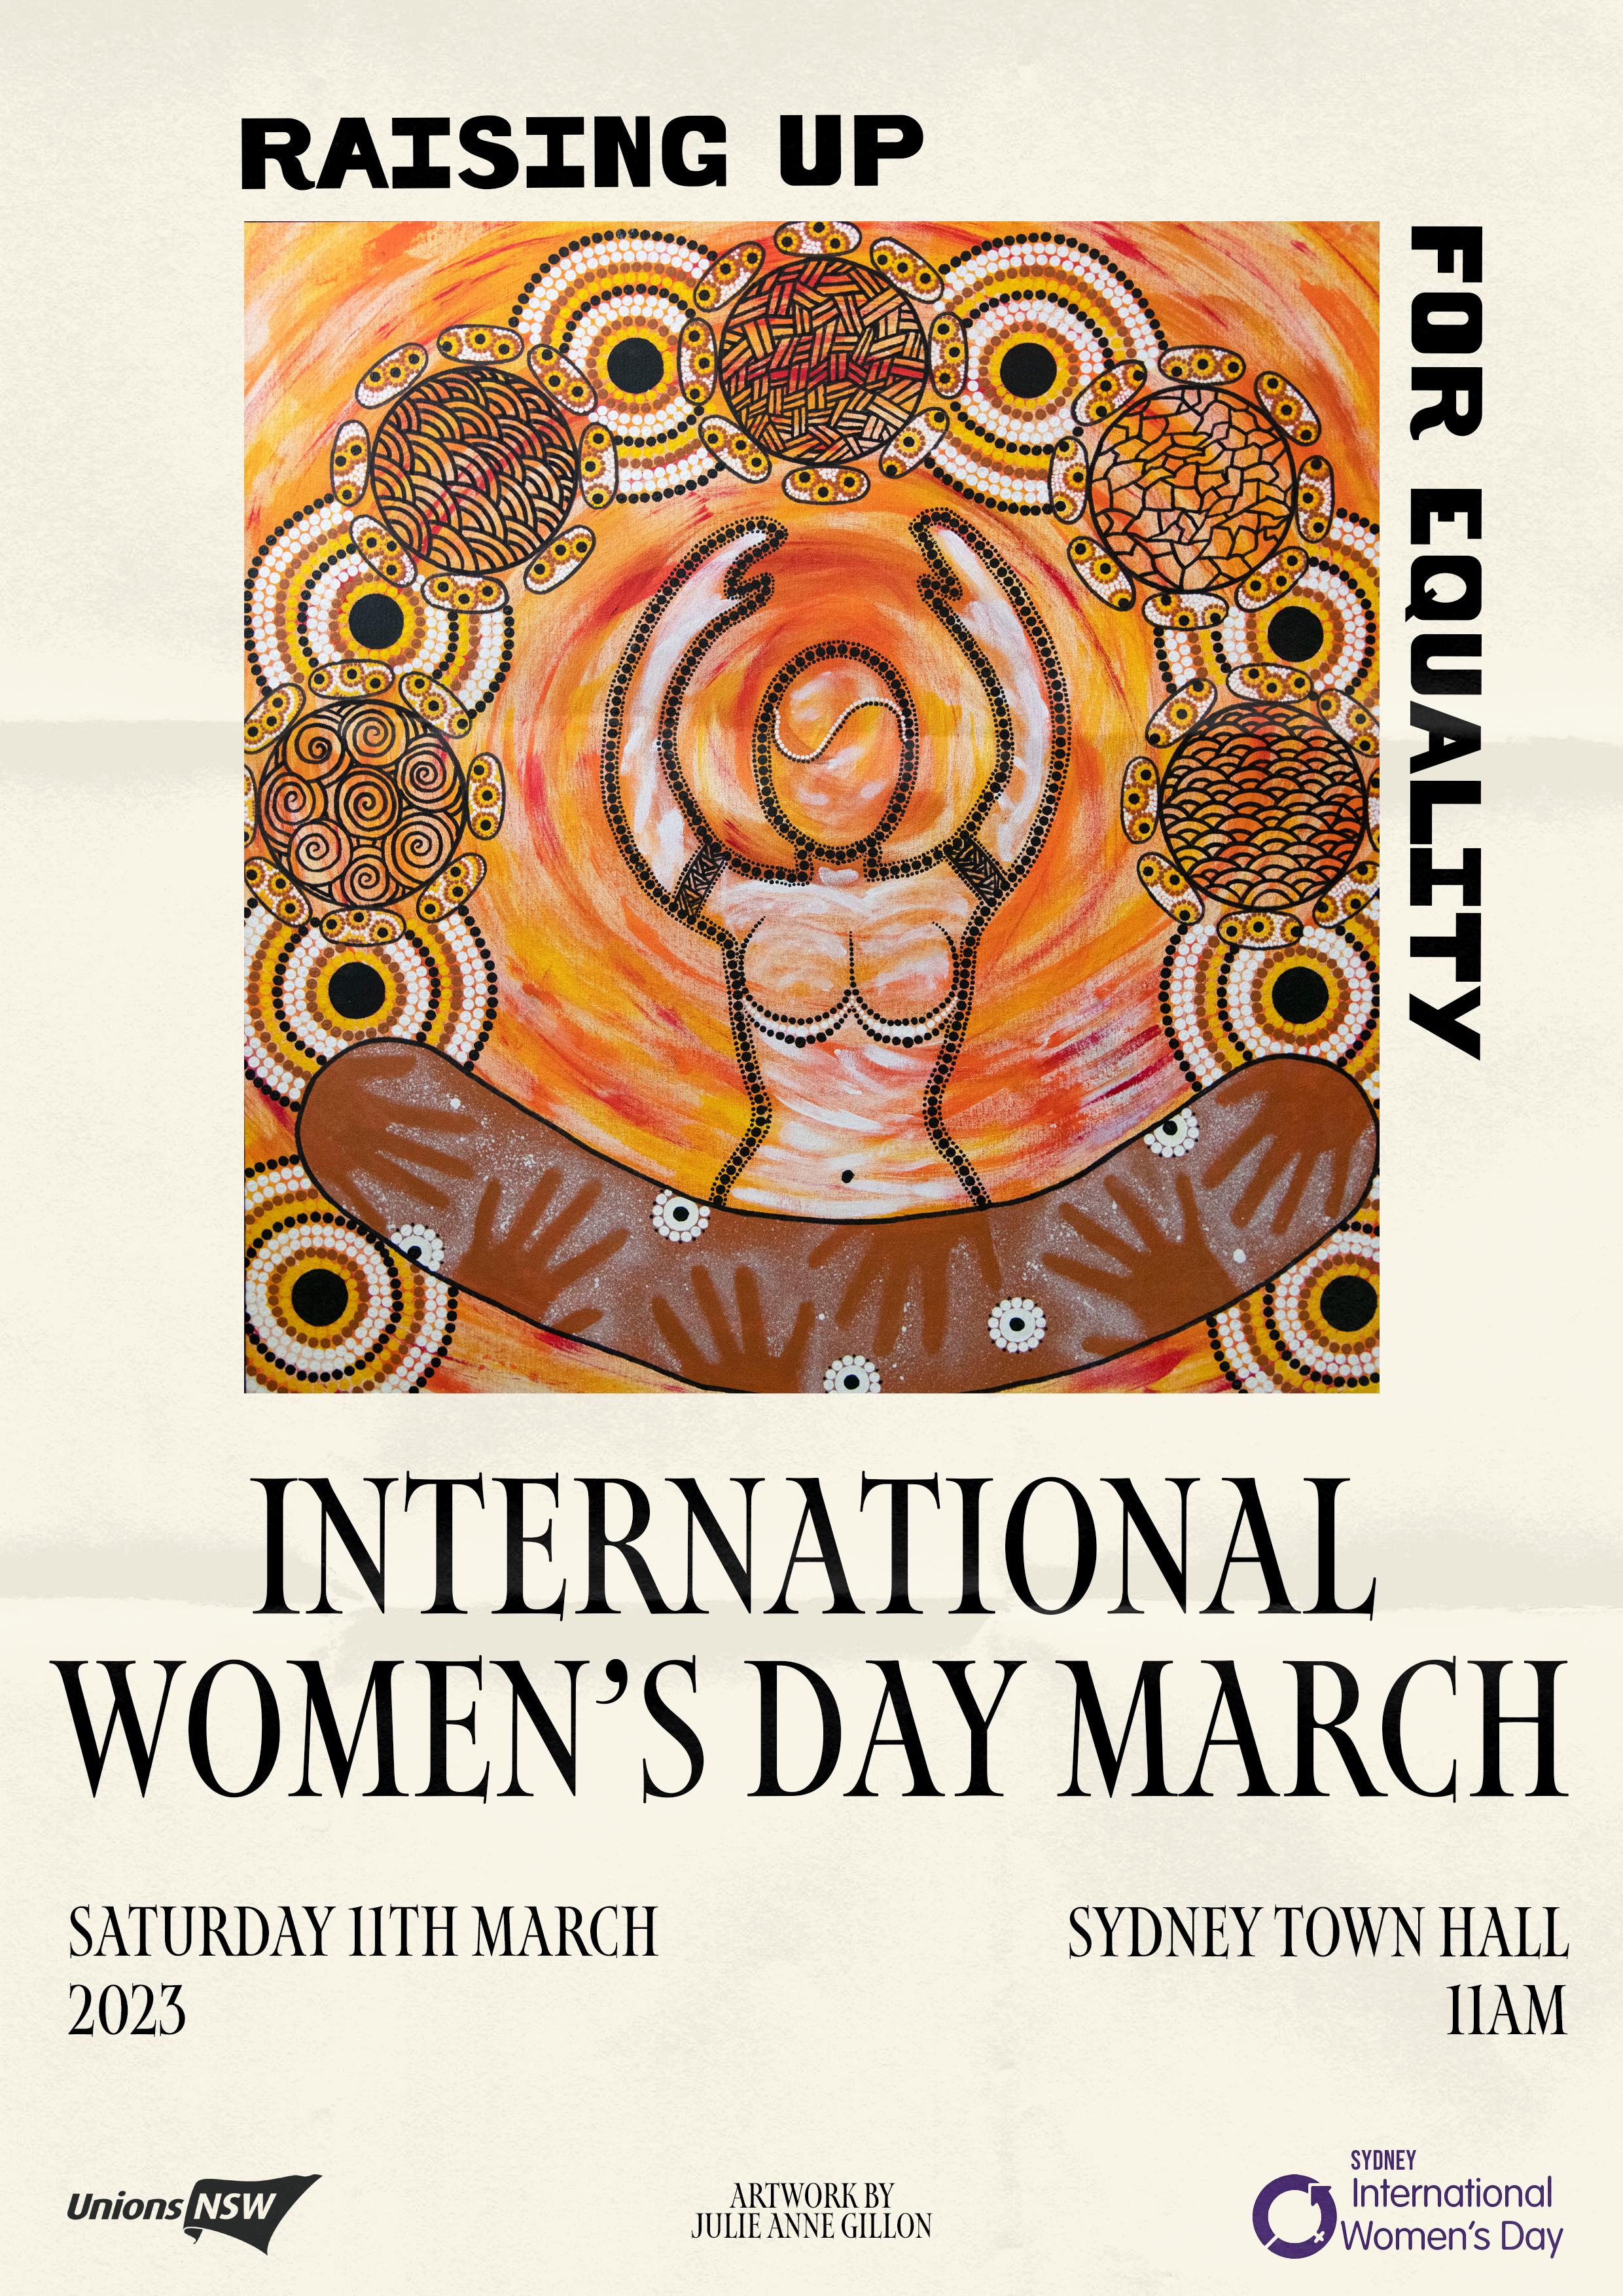 IWD: About International Women's Day